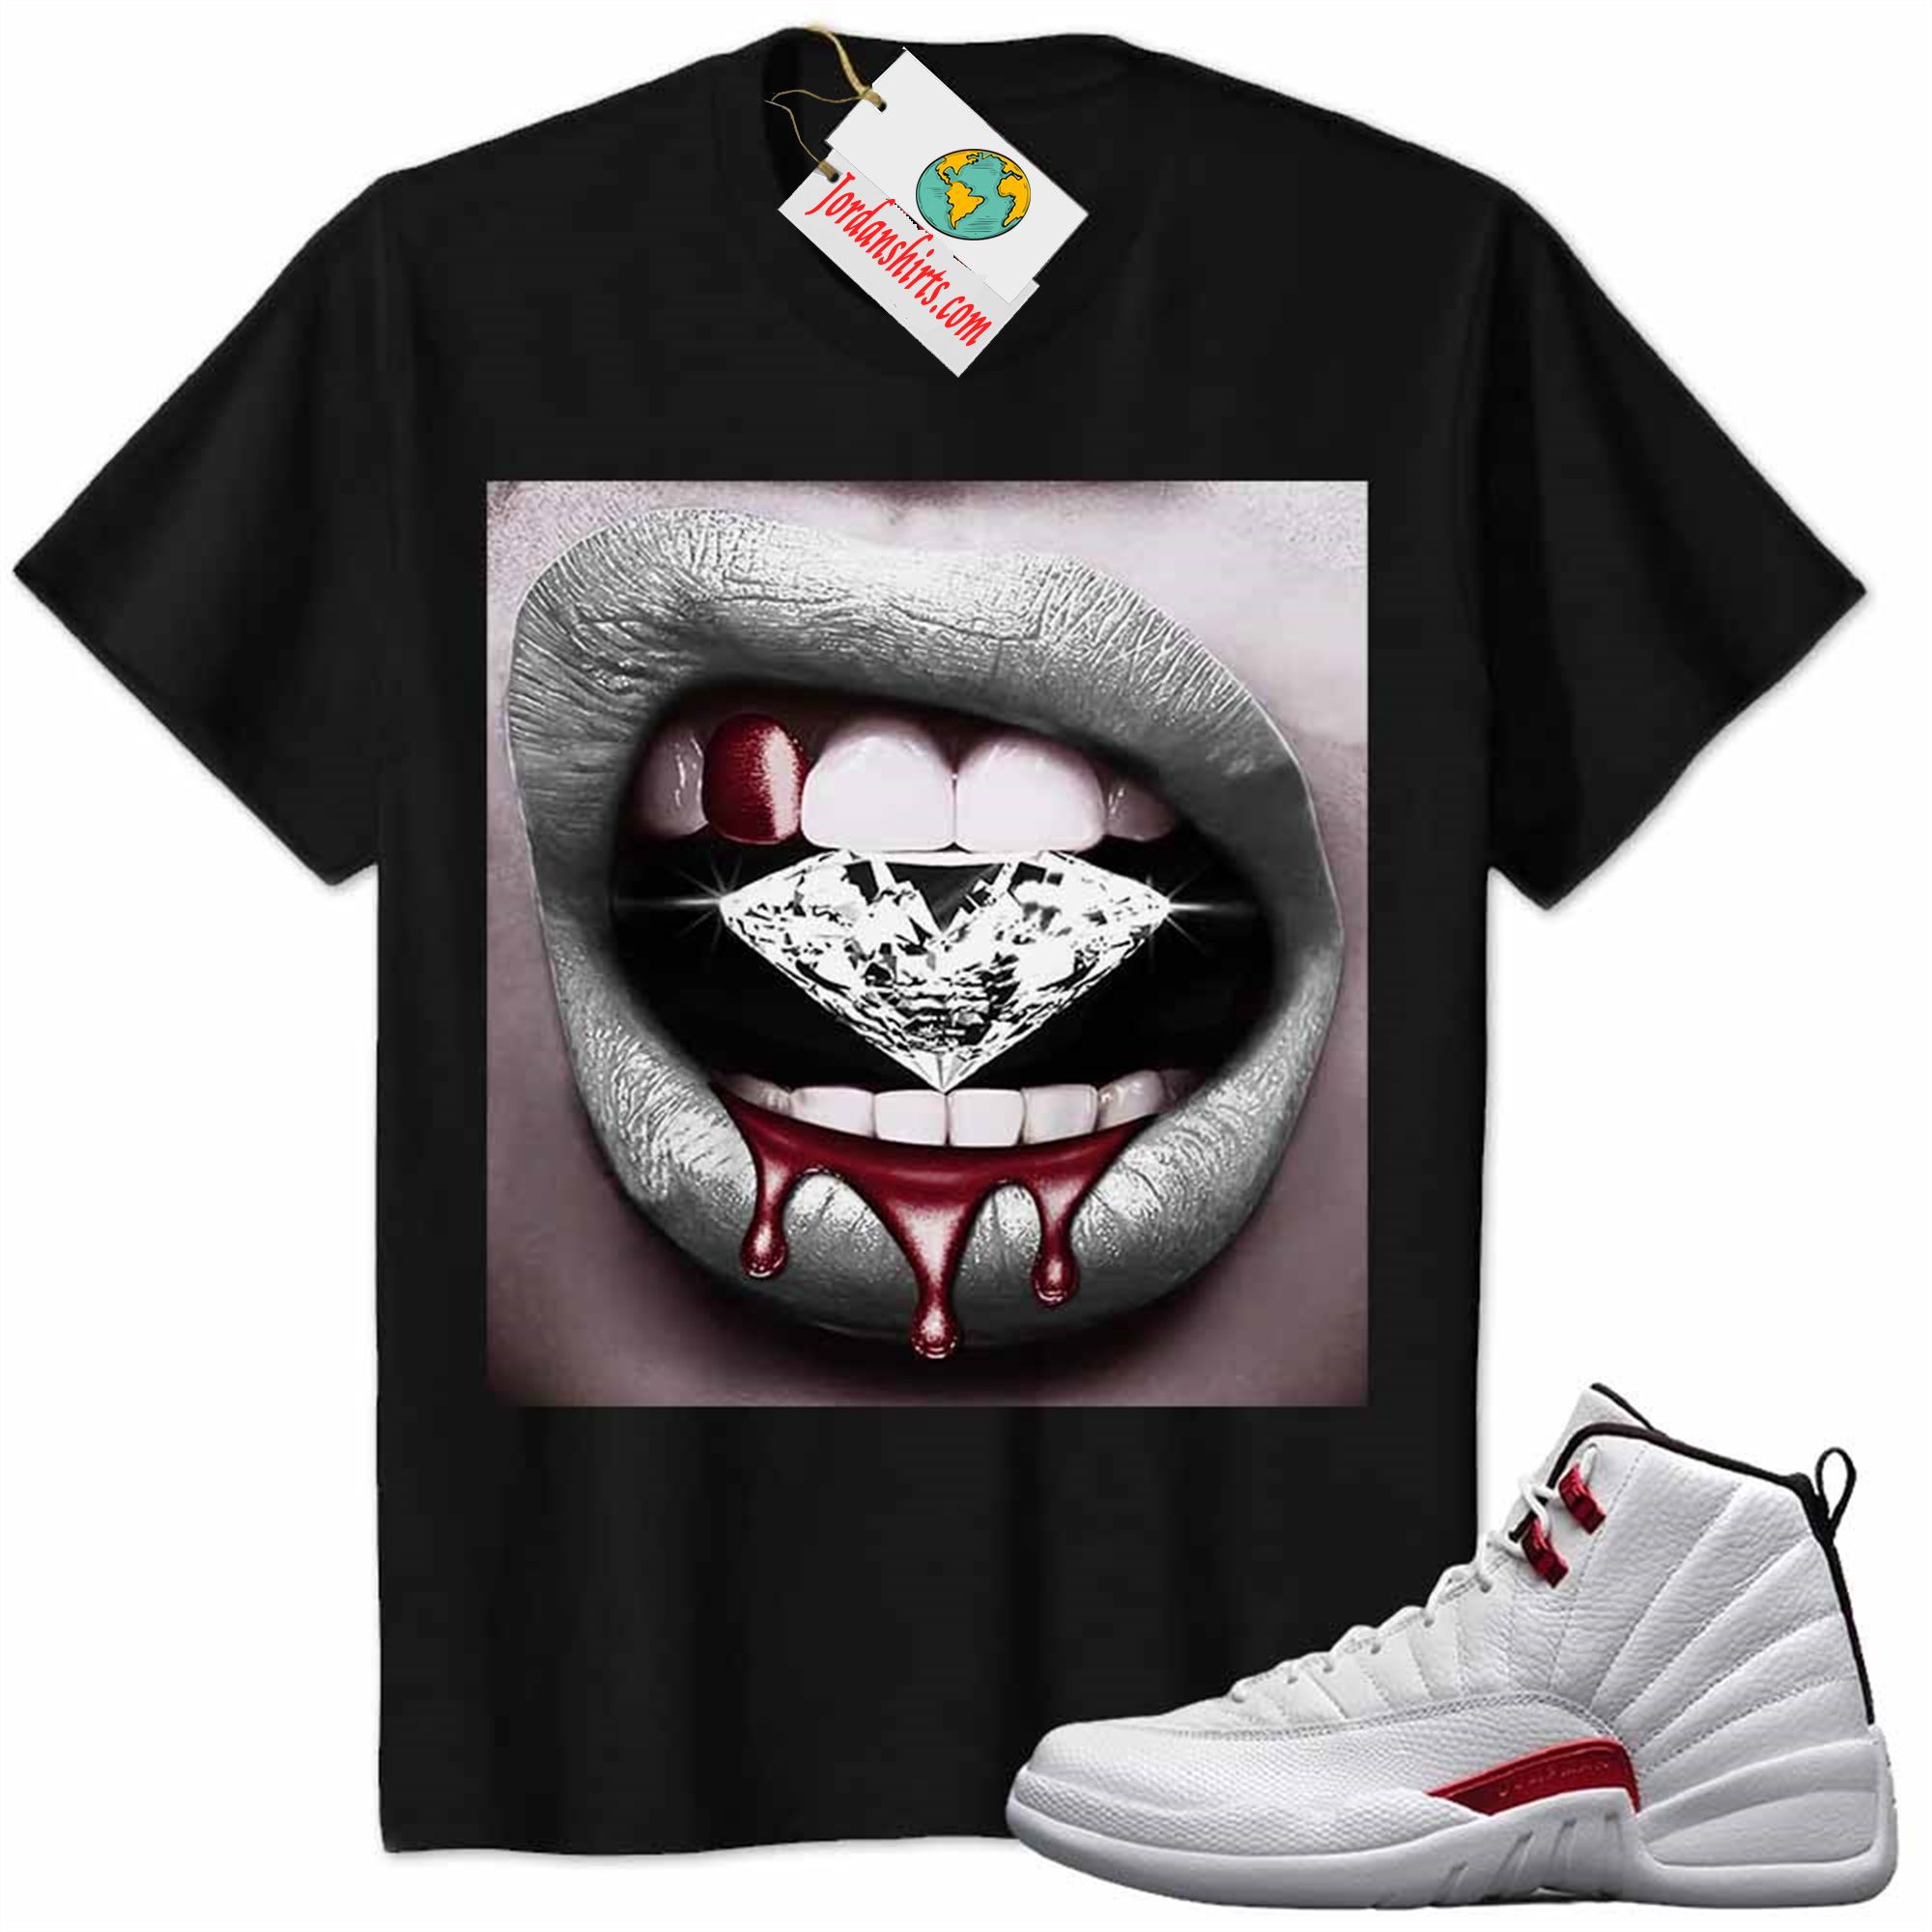 Jordan 12 Shirt, Jordan 12 Twist Shirt Sexy Lip Bite Diamond Dripping Black Full Size Up To 5xl